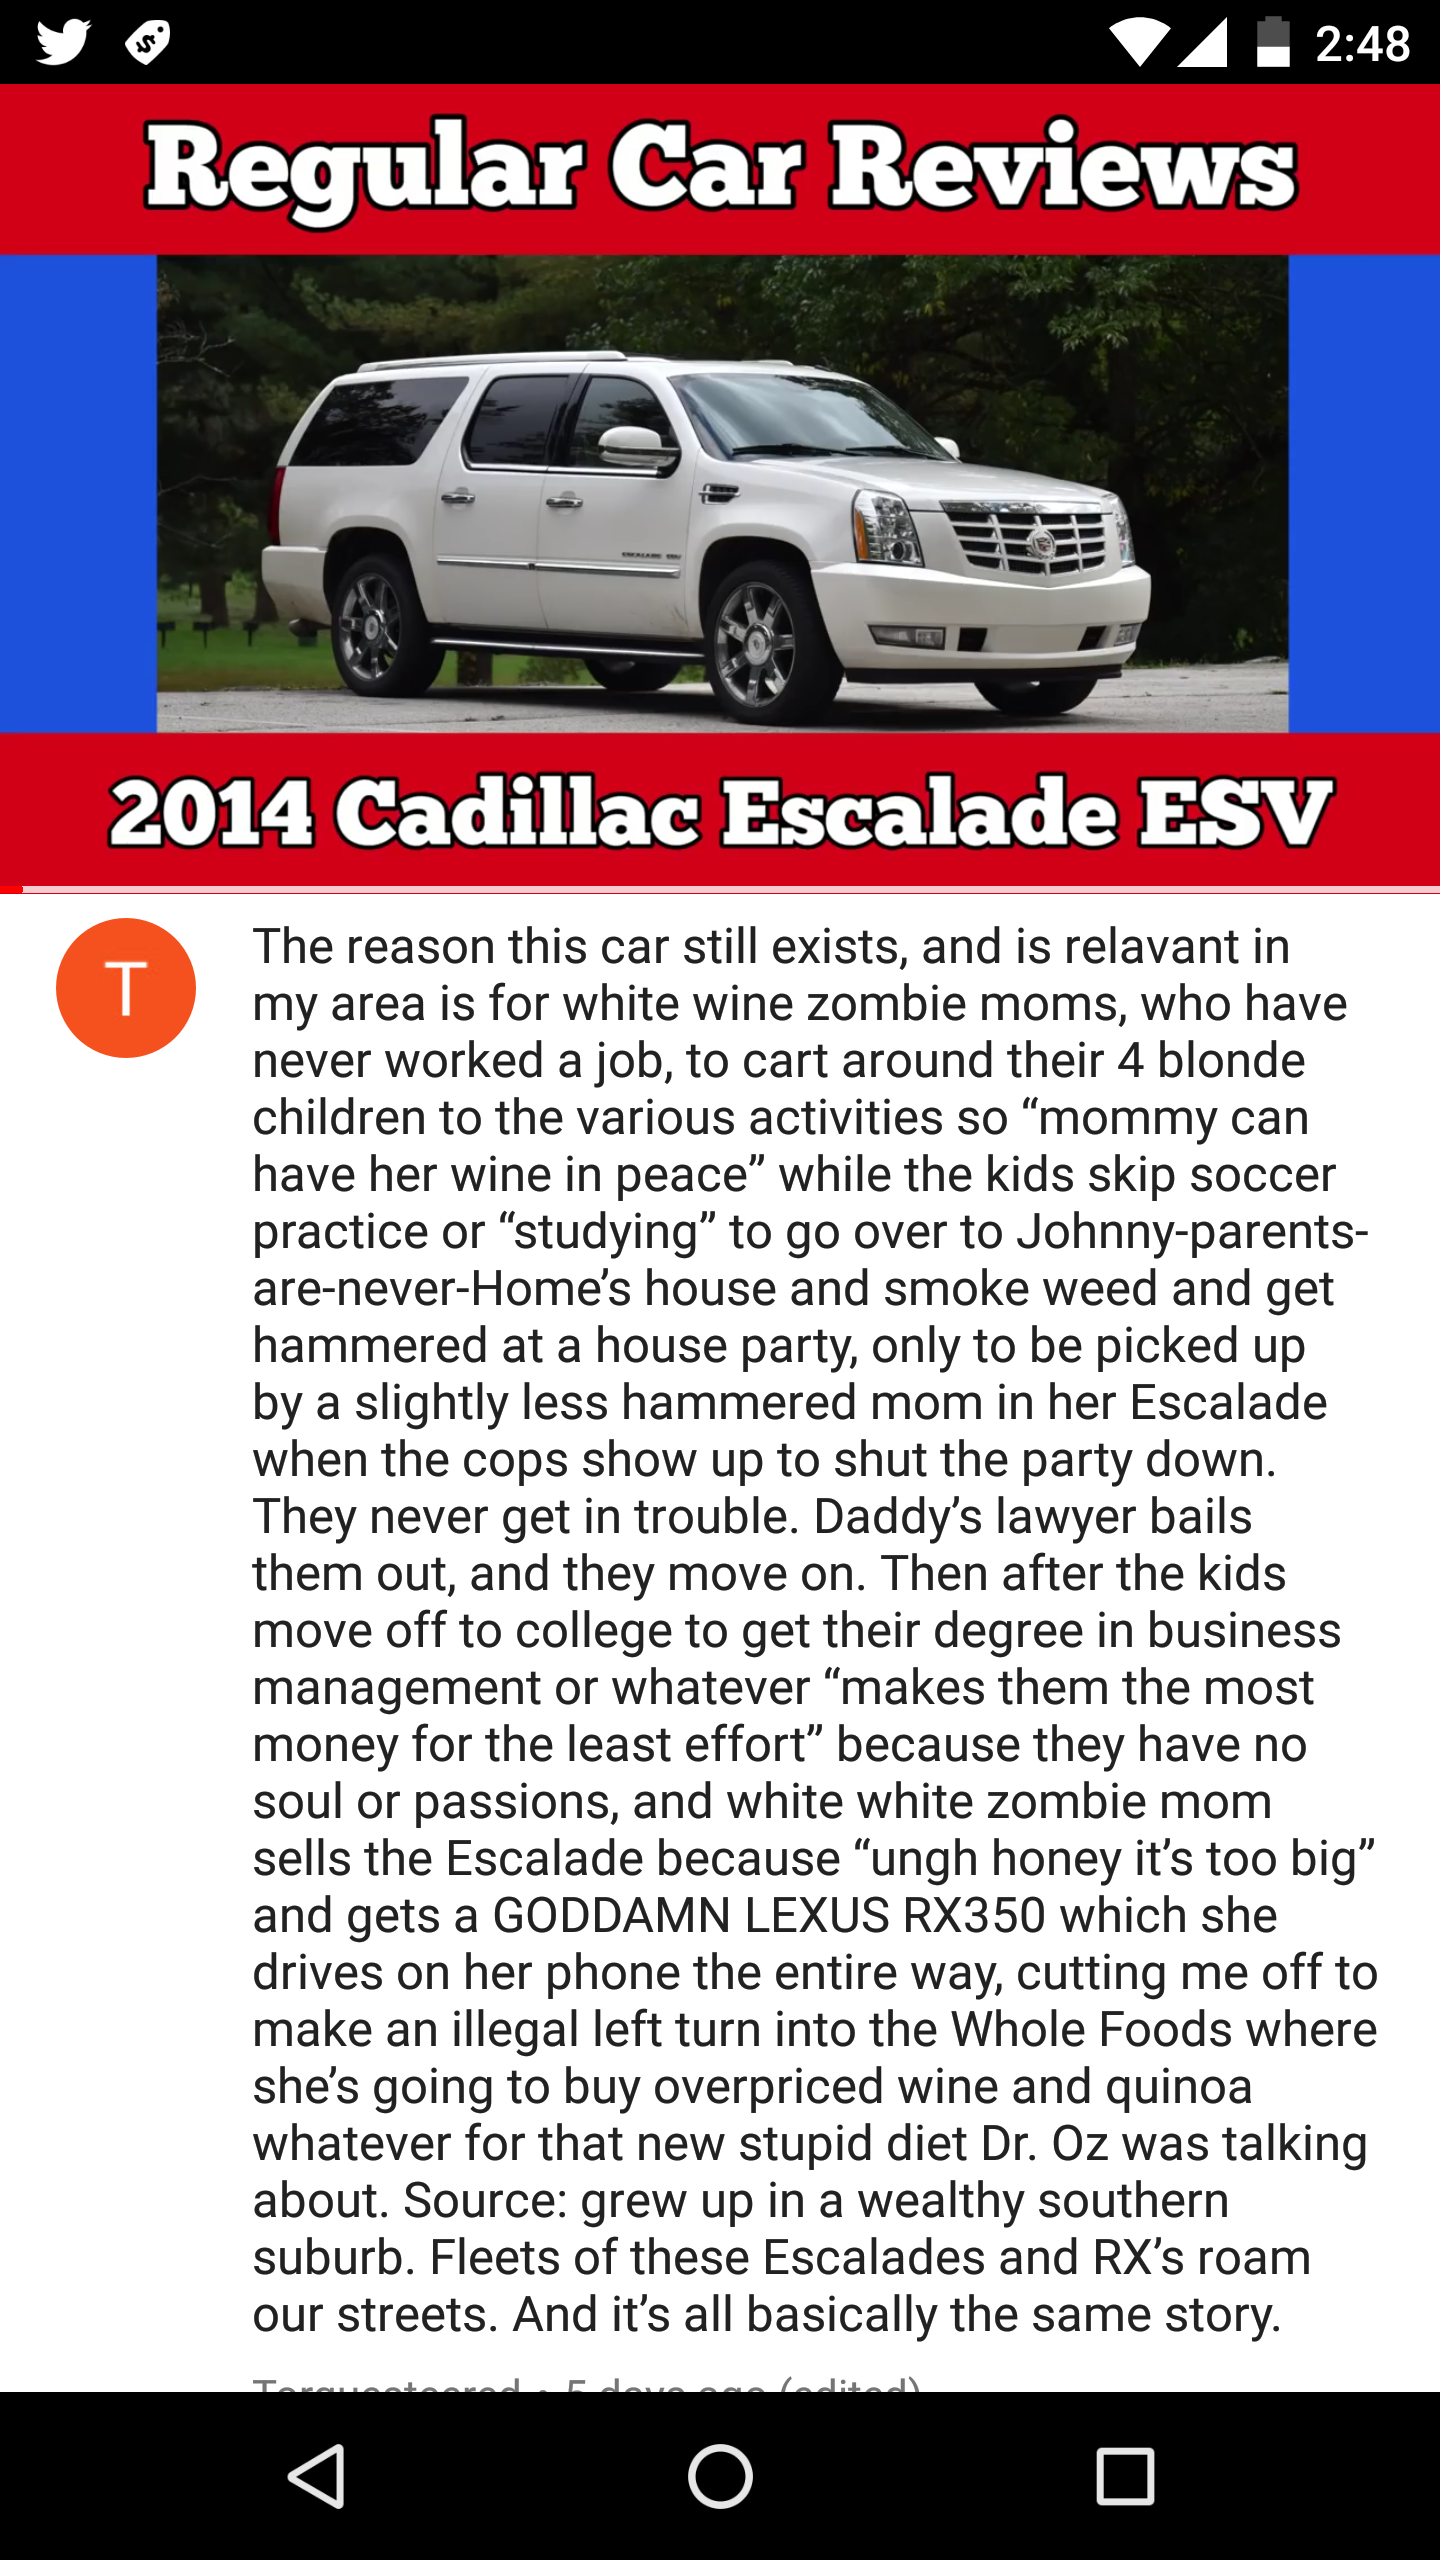 Why Cadillac Escalade exists